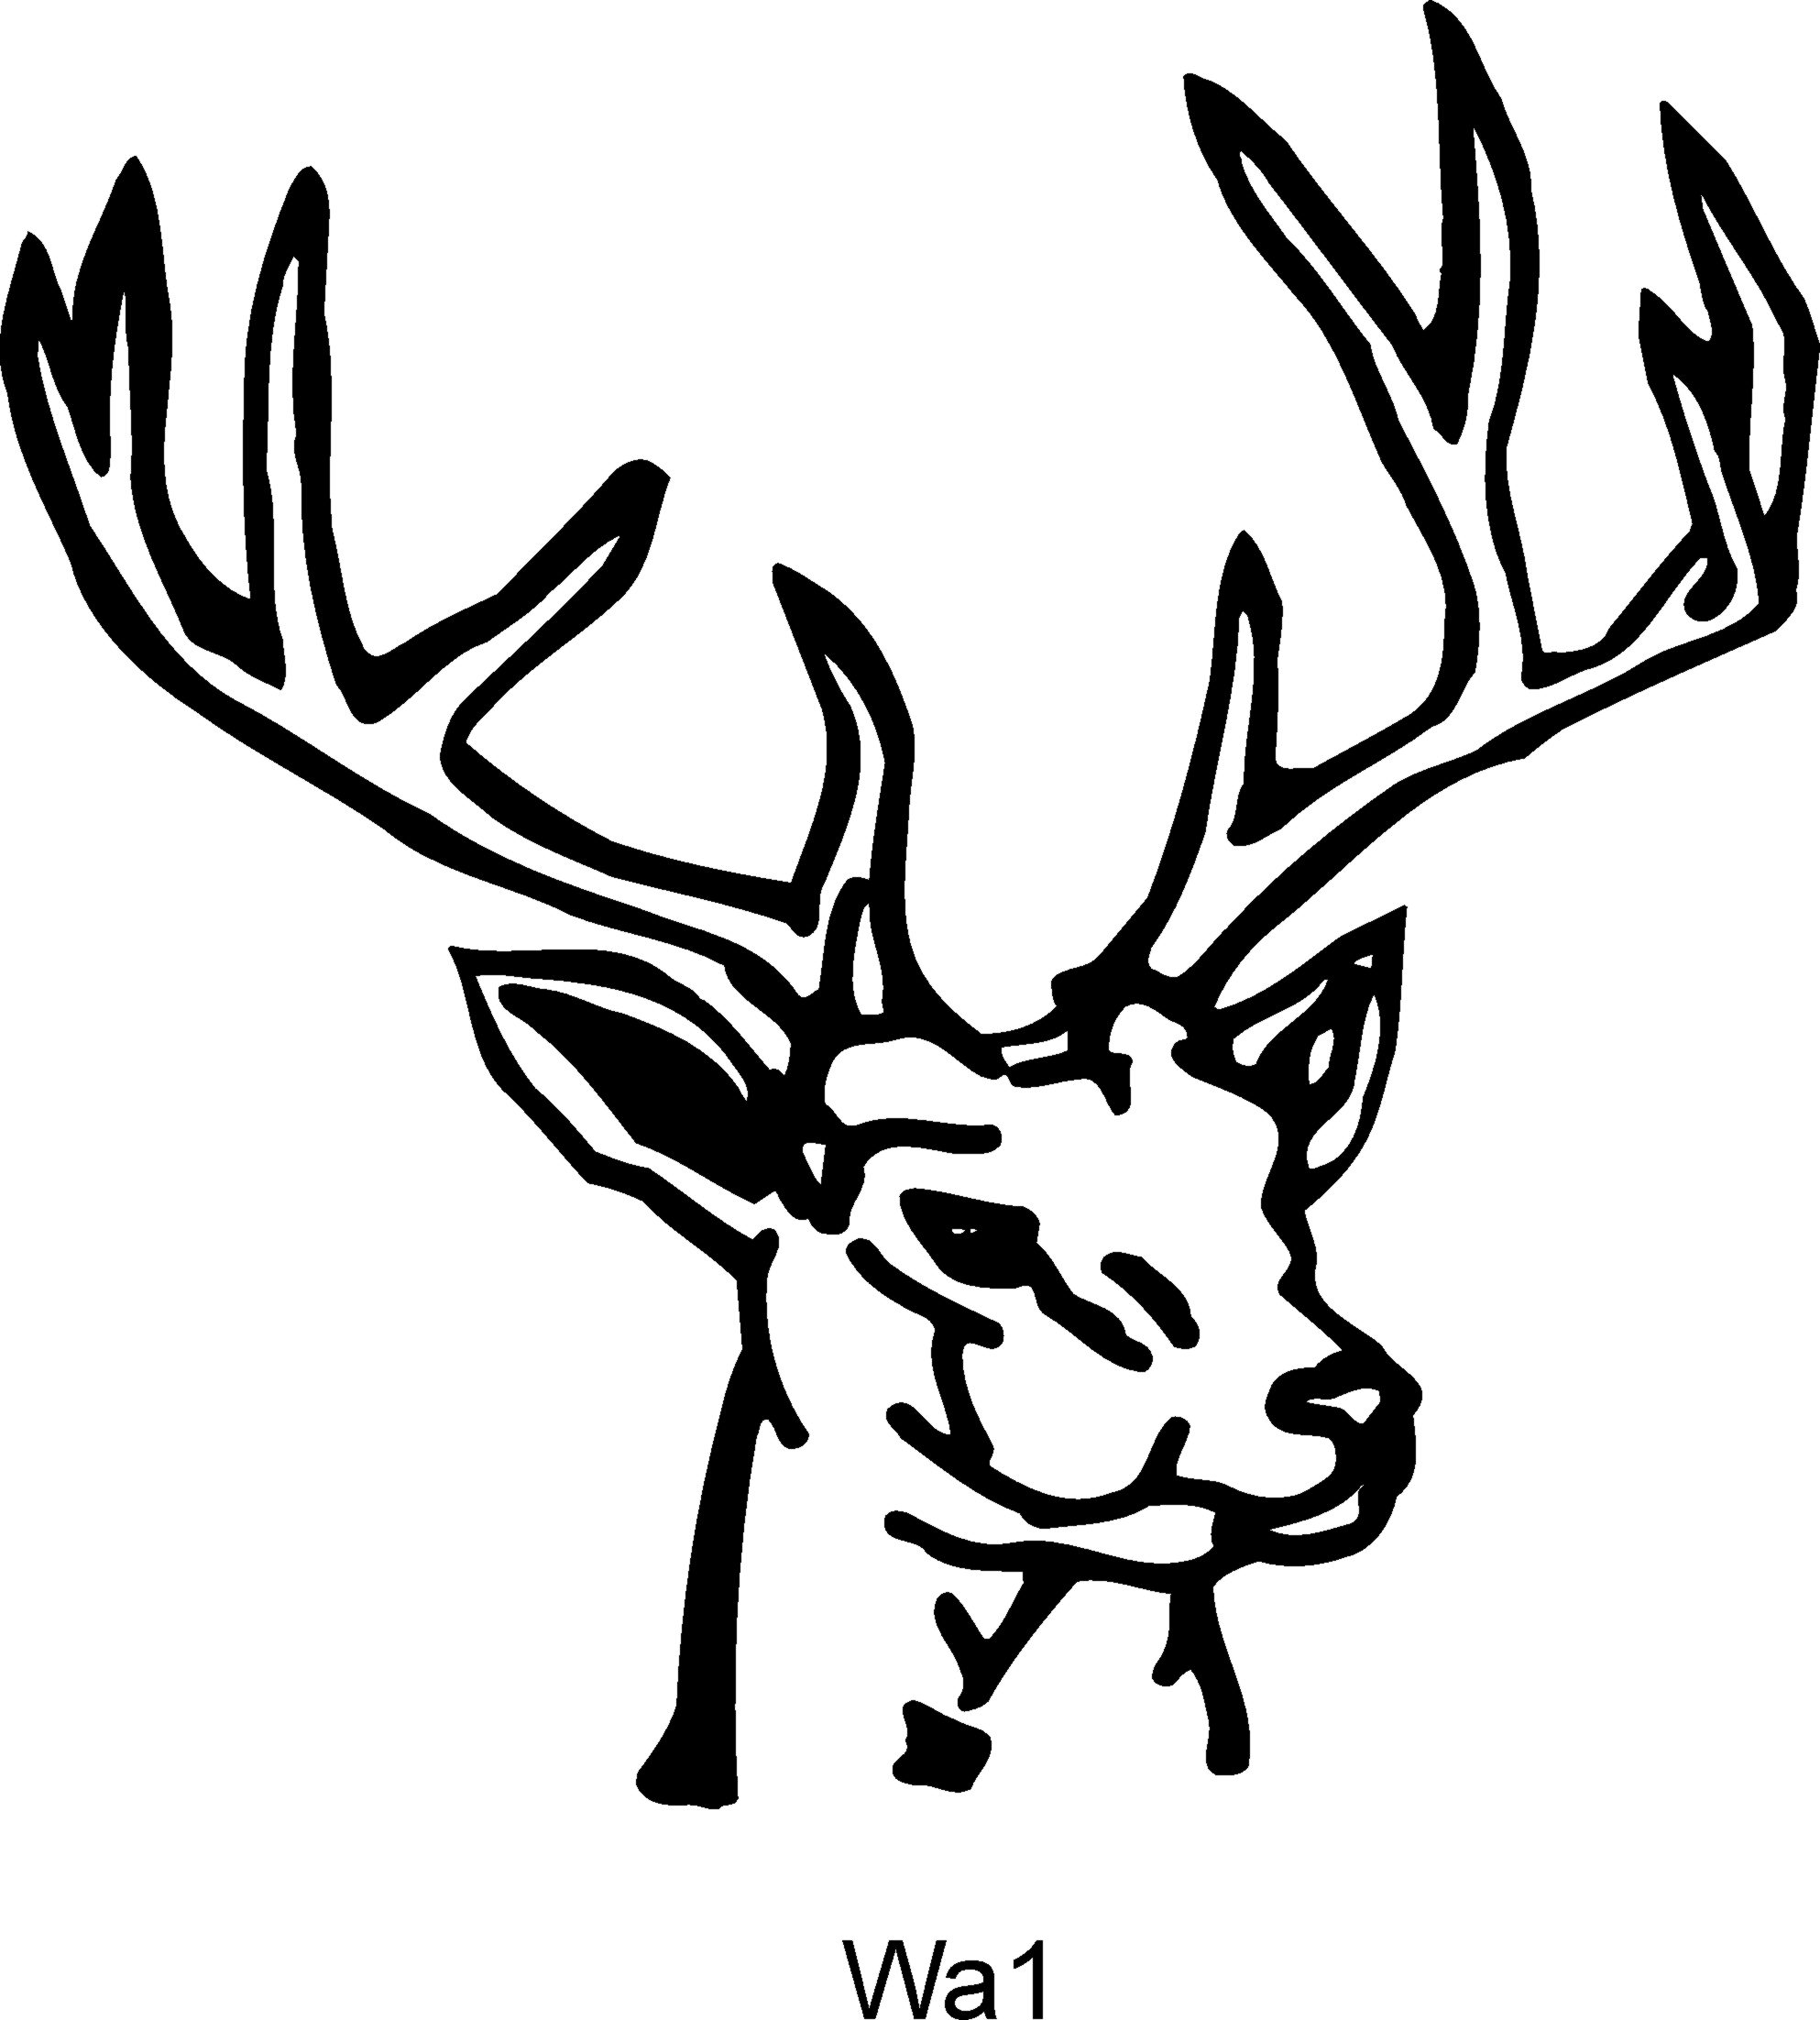 Free Deer Head Cliparts, Download Free Deer Head Cliparts